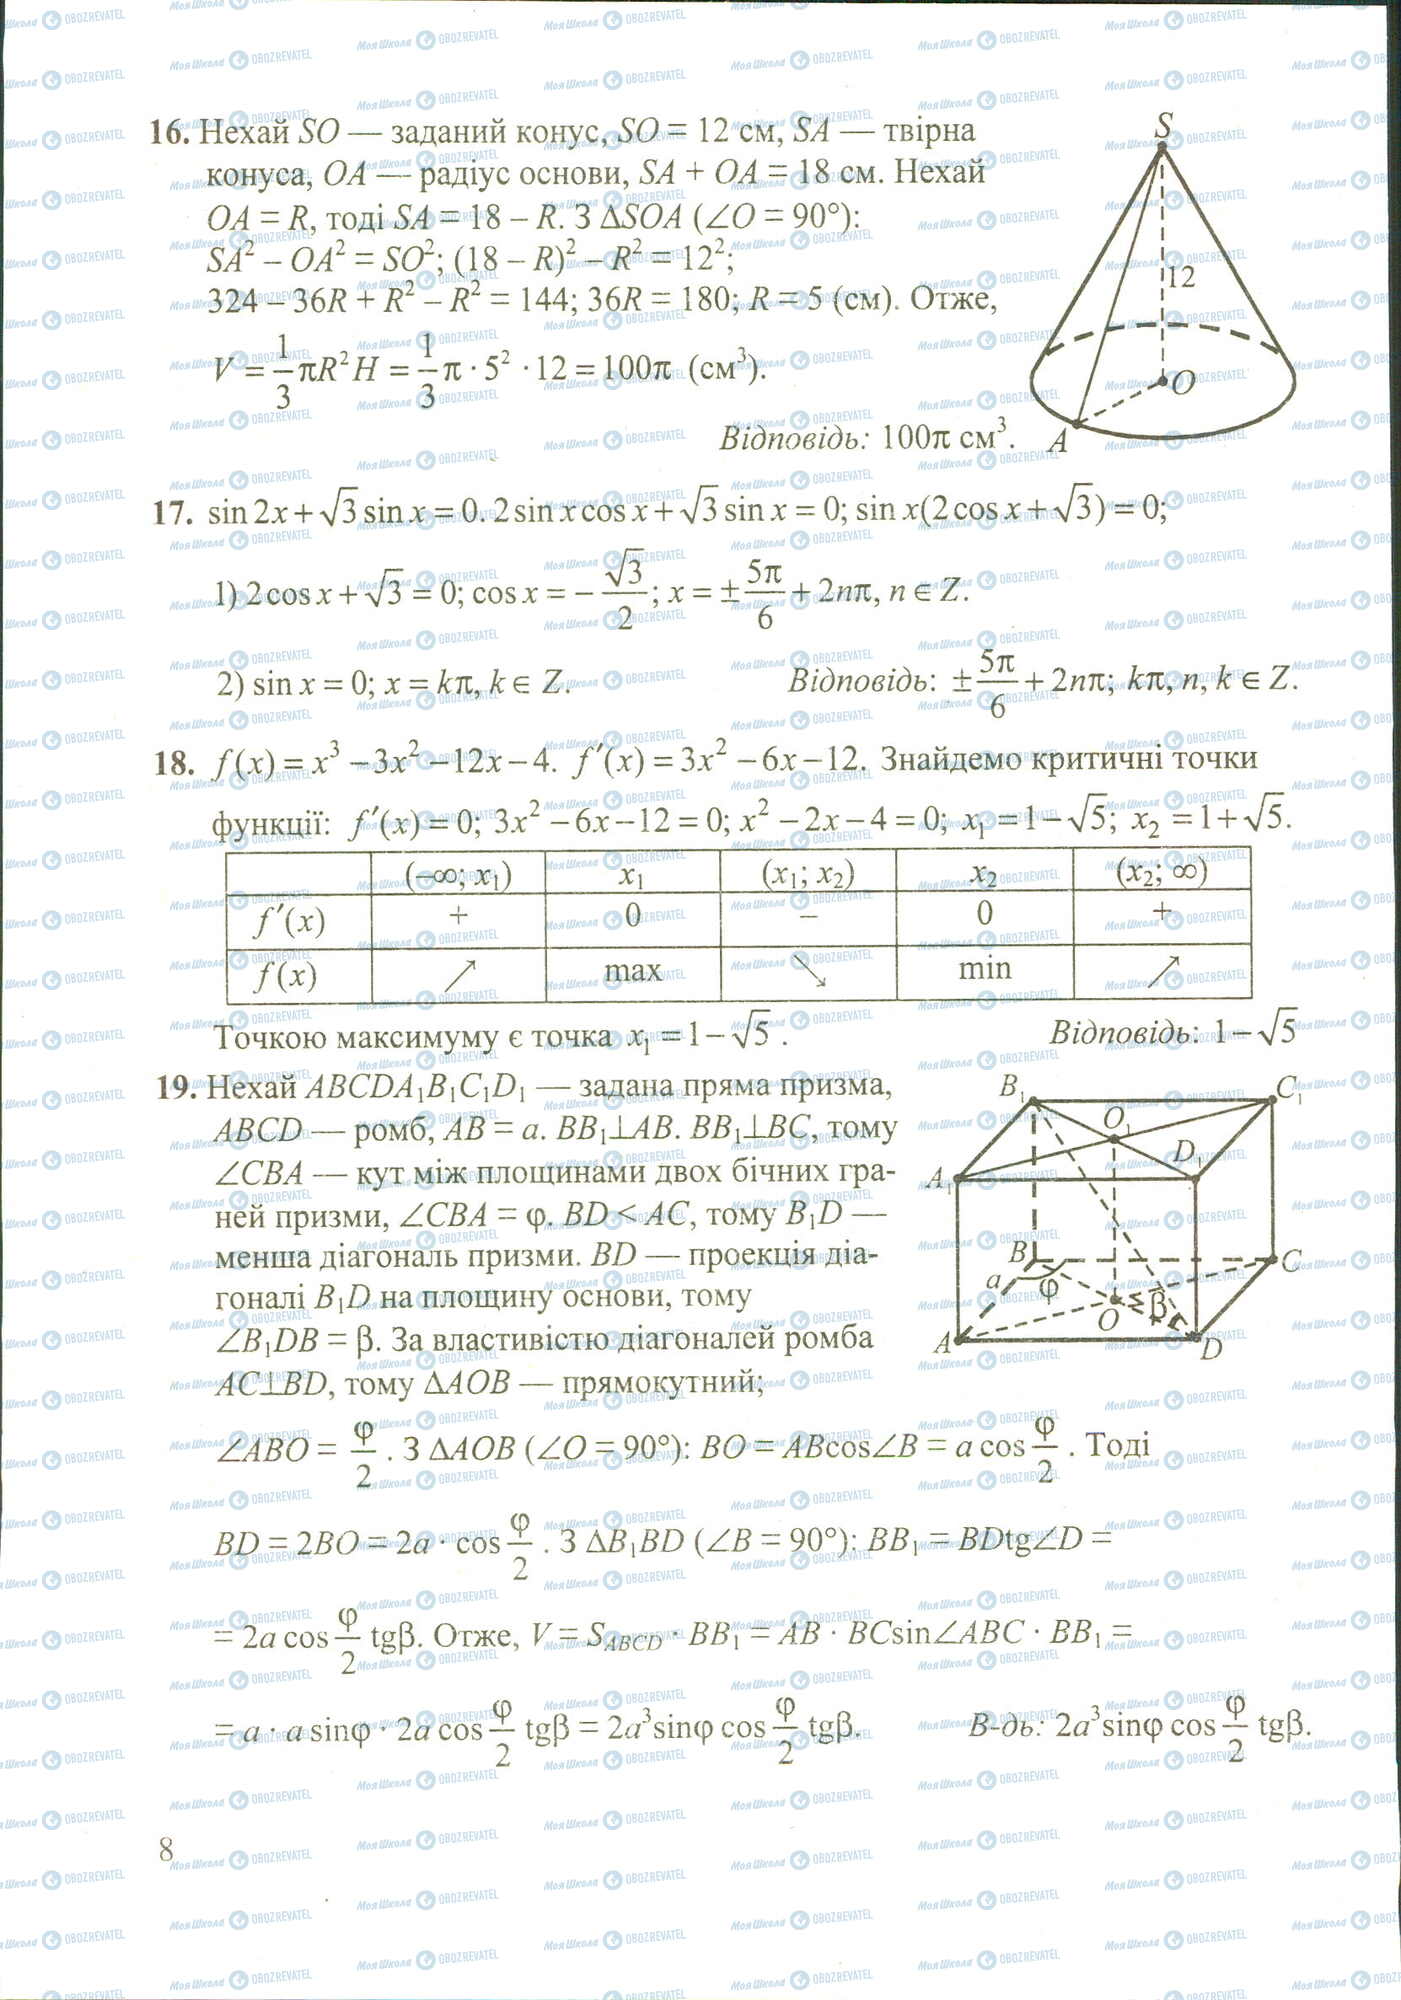 ДПА Математика 11 класс страница image0000003B